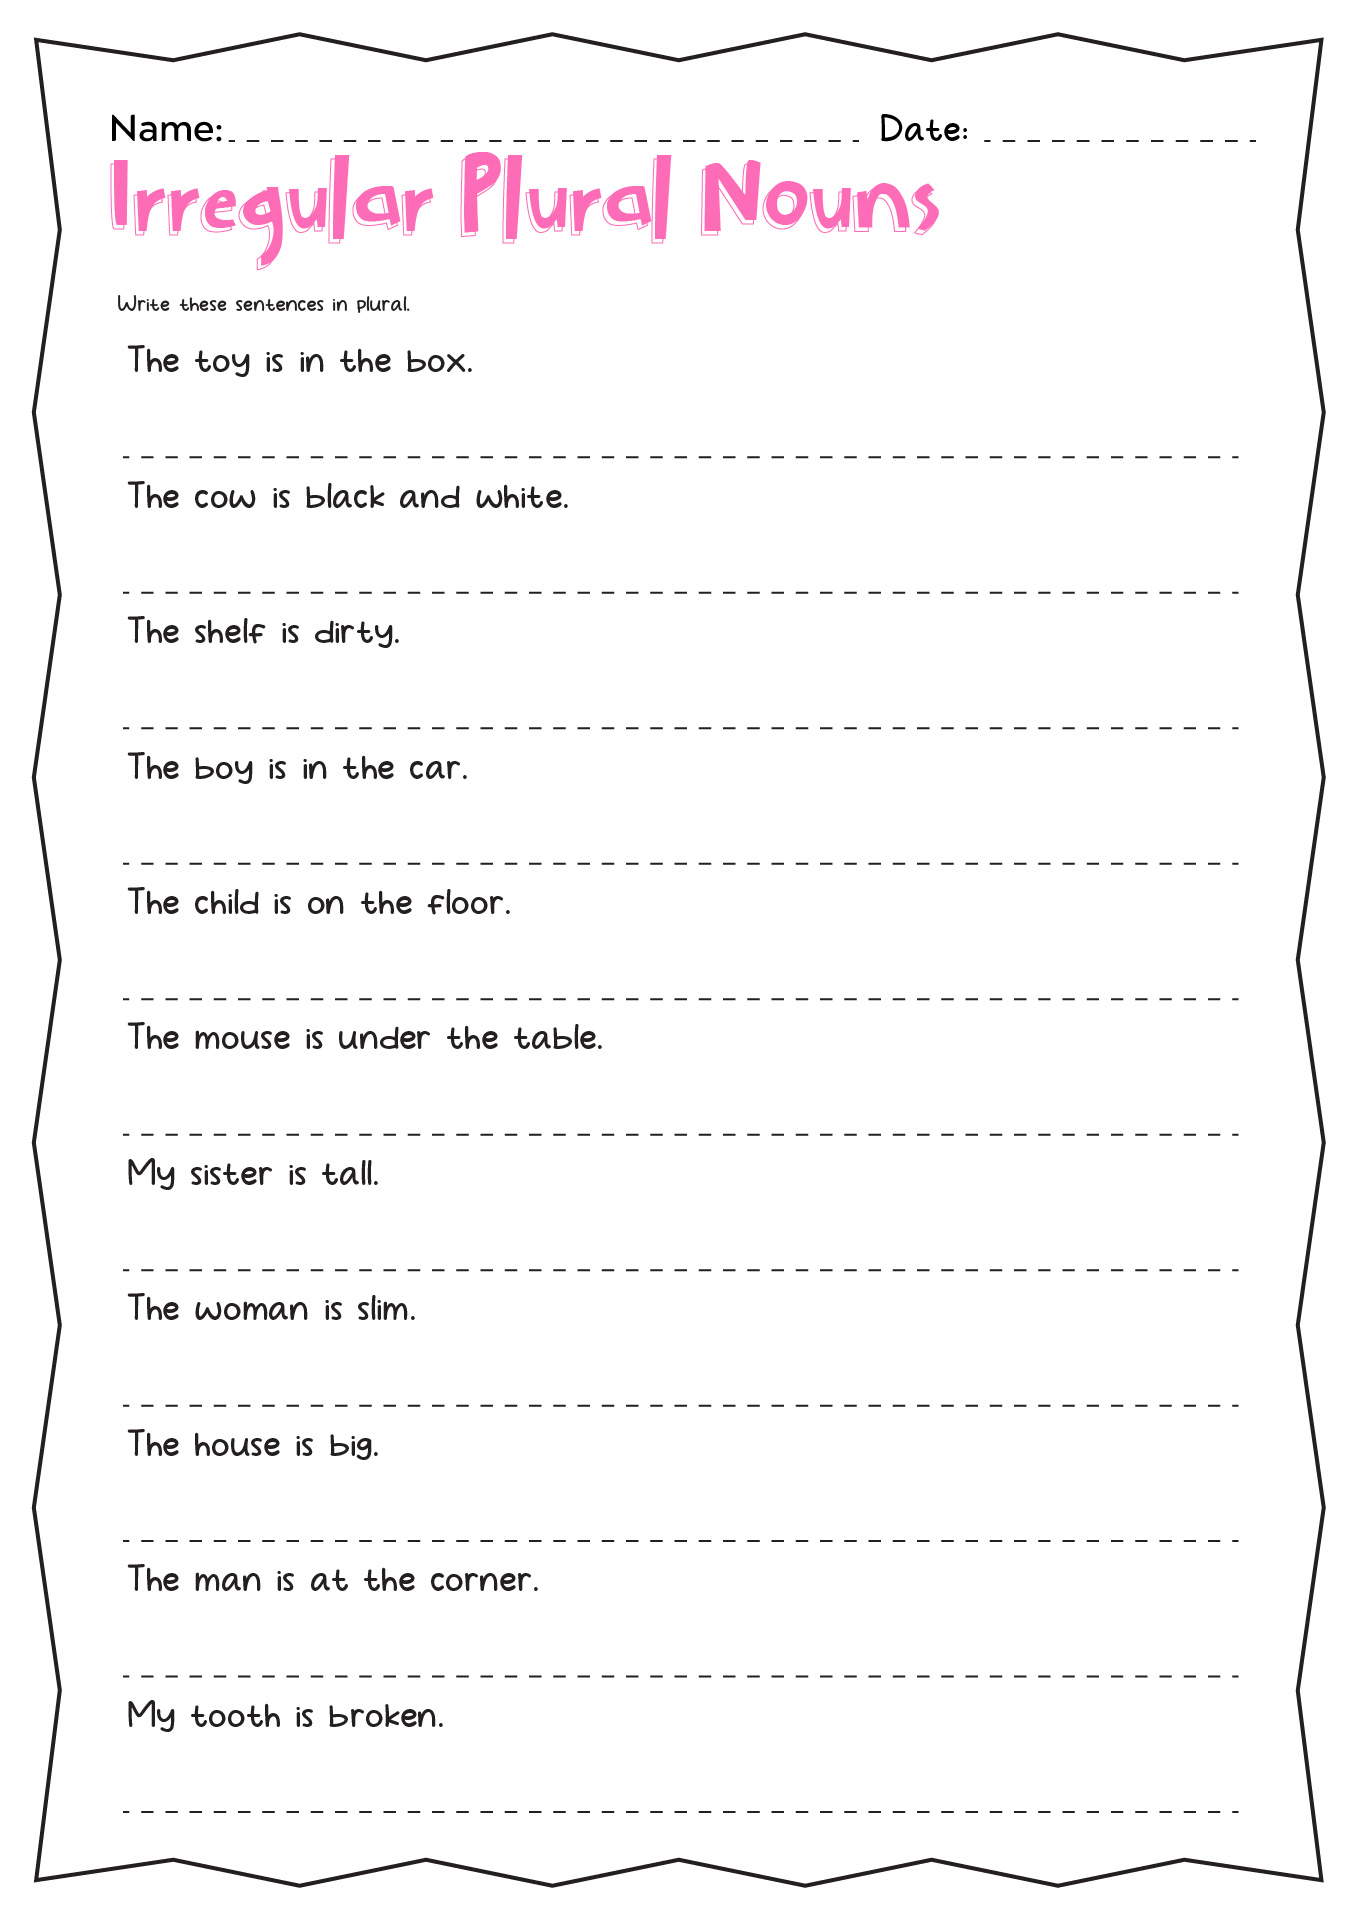 Irregular Plural Nouns Worksheets 6th Grade Image